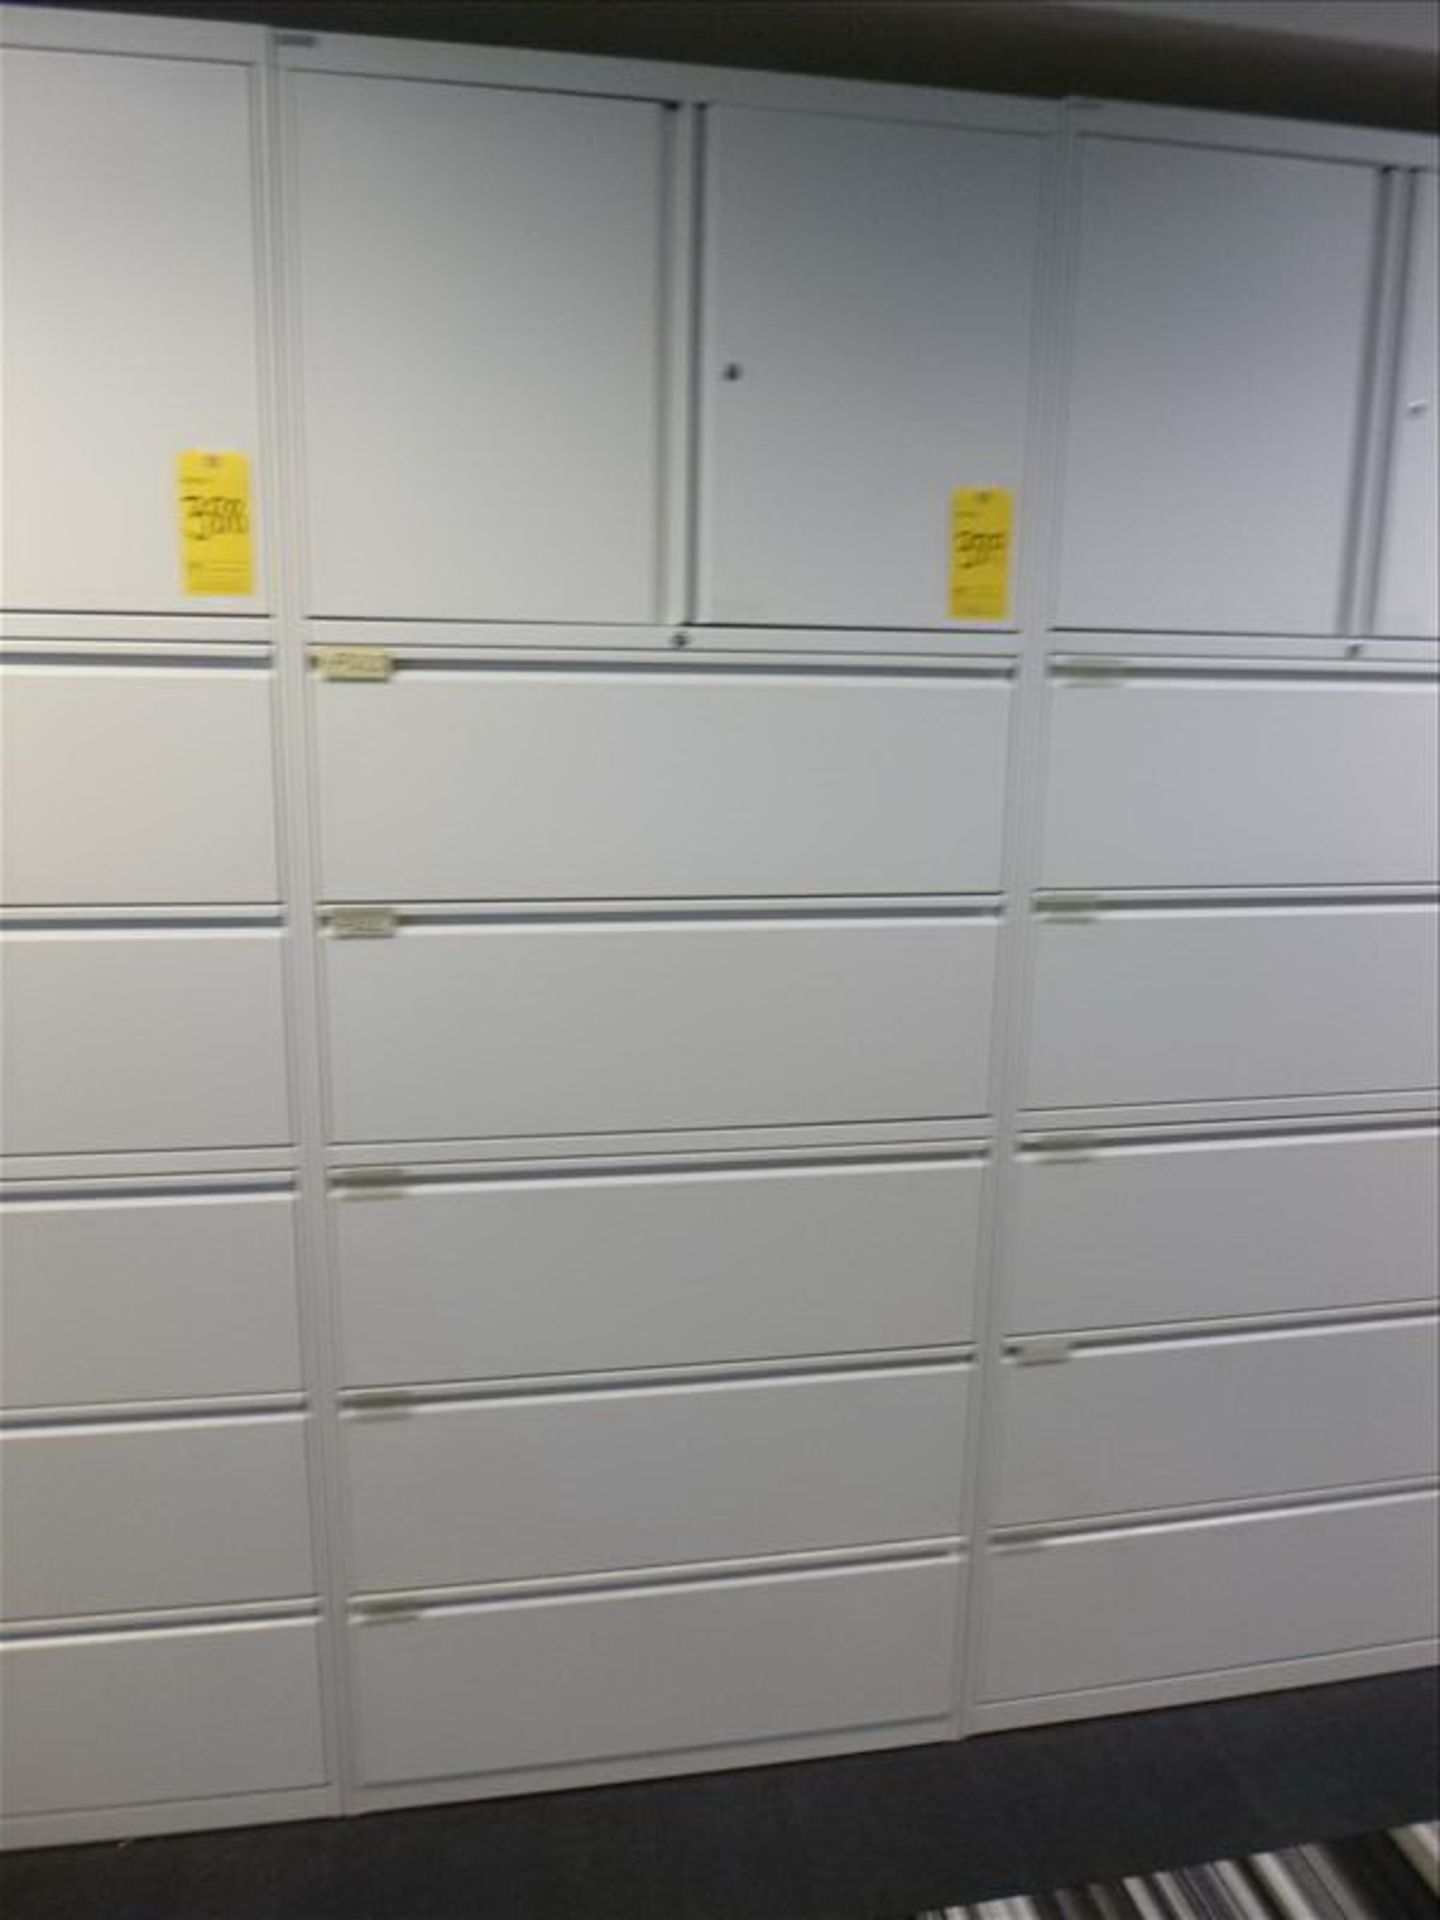 FlexFab horizontal filing cabinet, 5-drawer w/ 2-door storage, 36"W x 18"D x 90"H [FLR3]